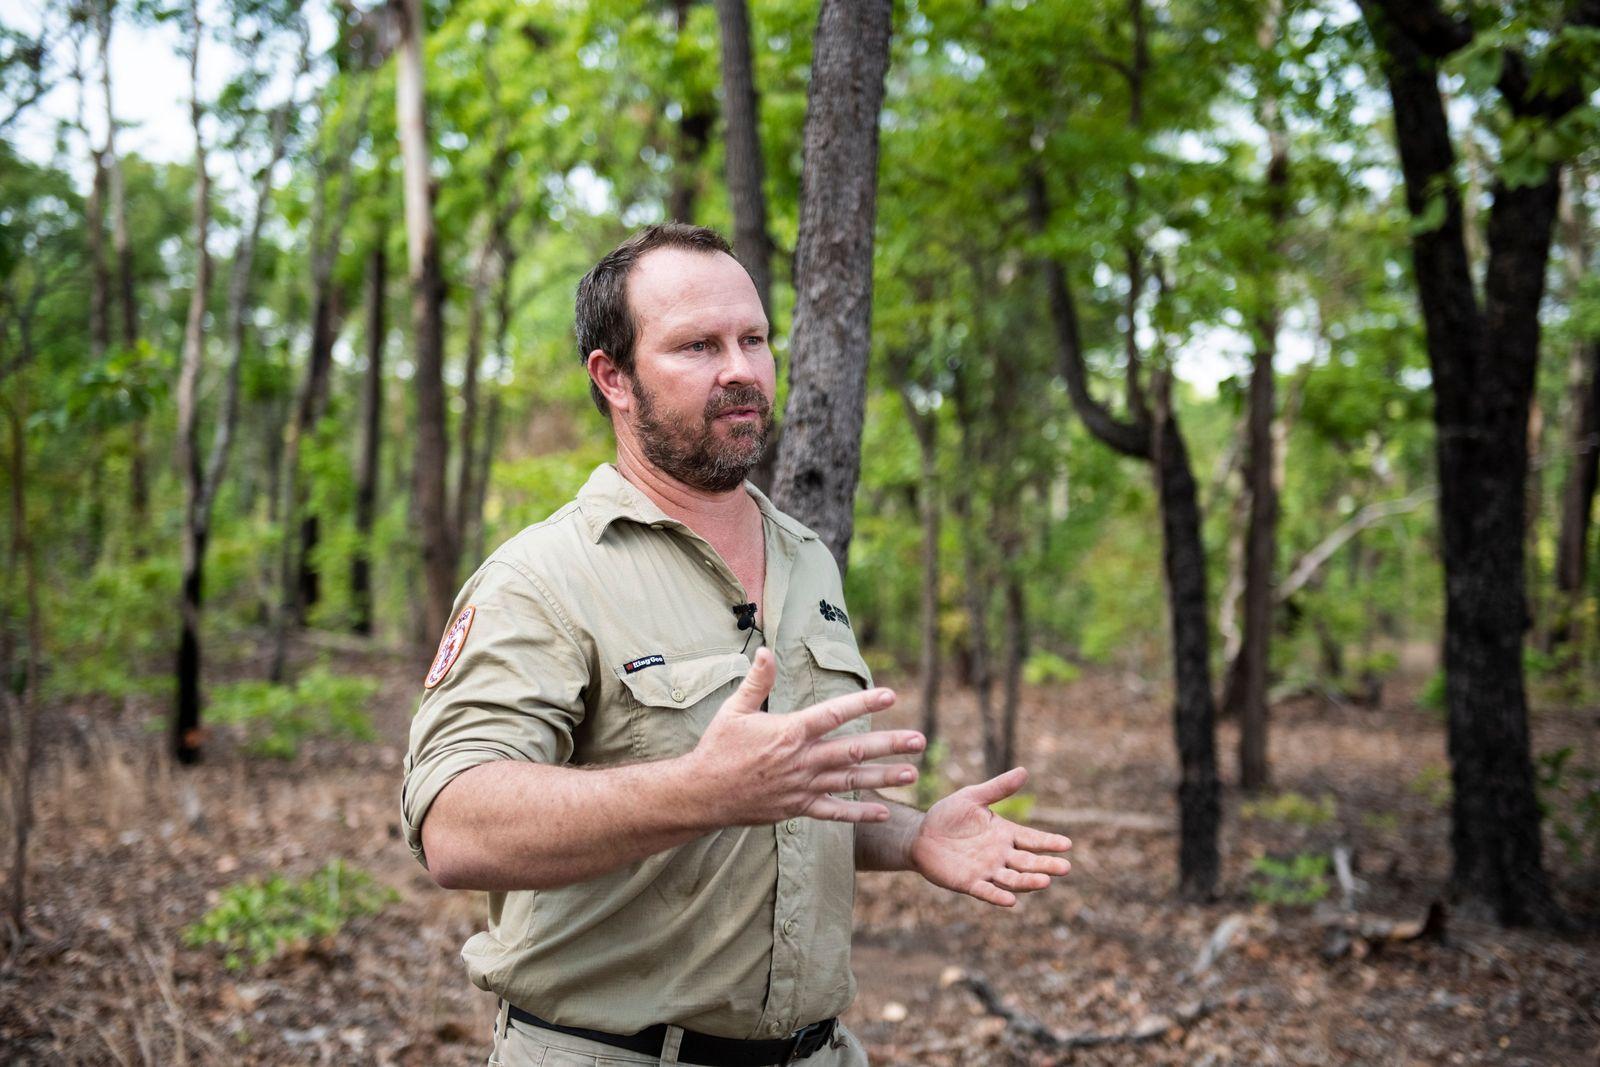 Steve Dwyer in his khaki uniform of an NT park ranger in front of a vibrant green savanna backgrown